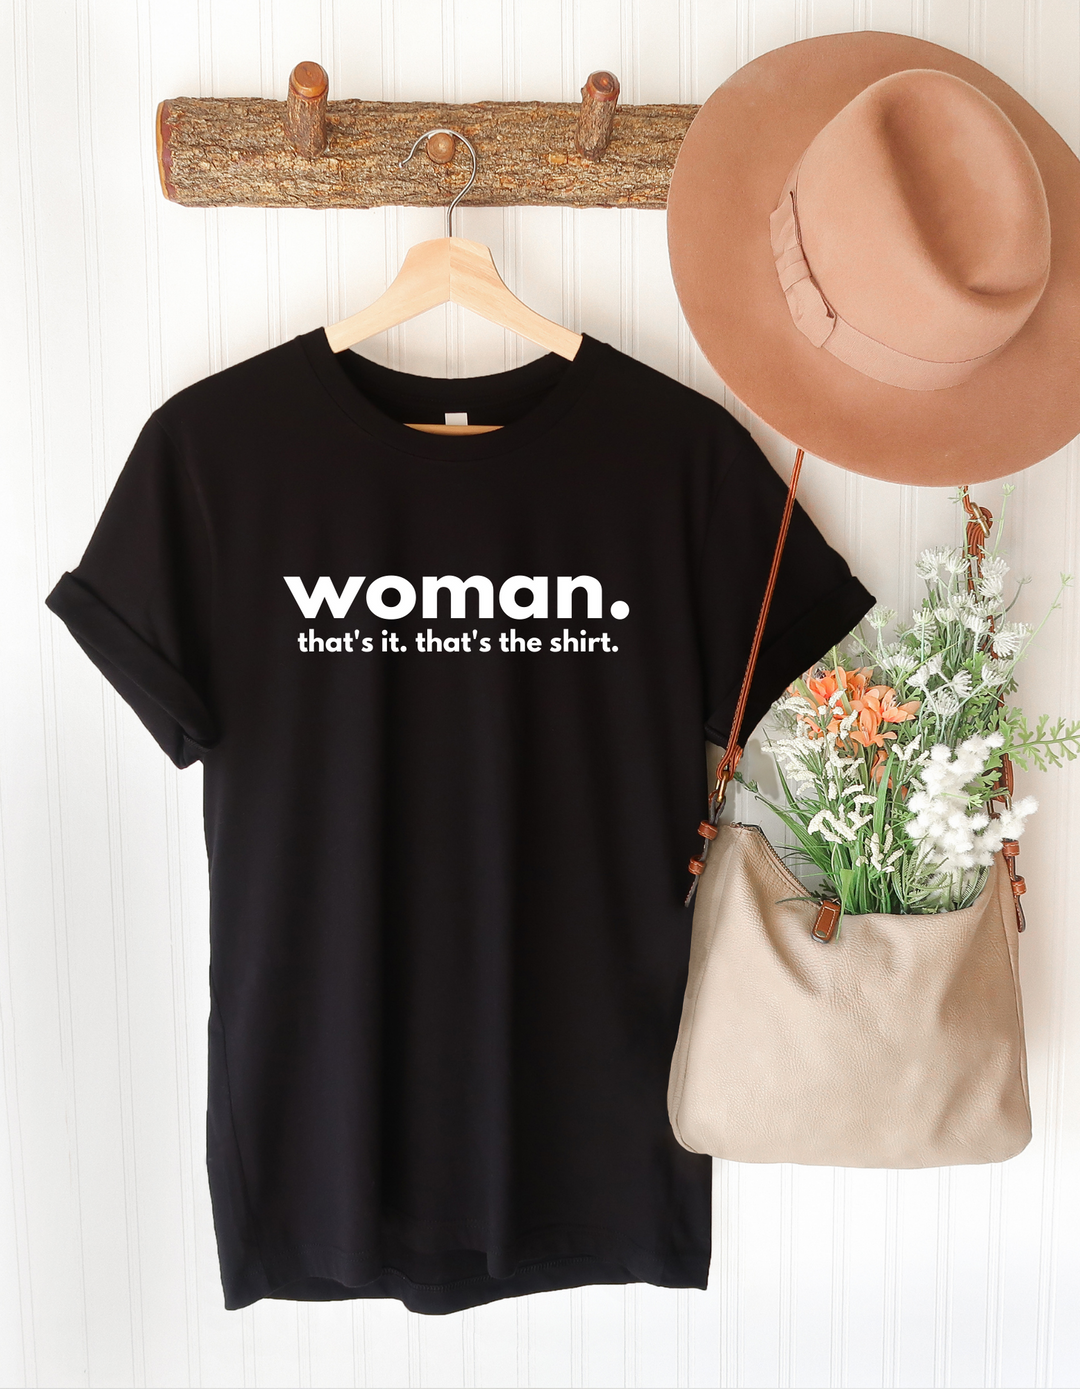 woman. shirt